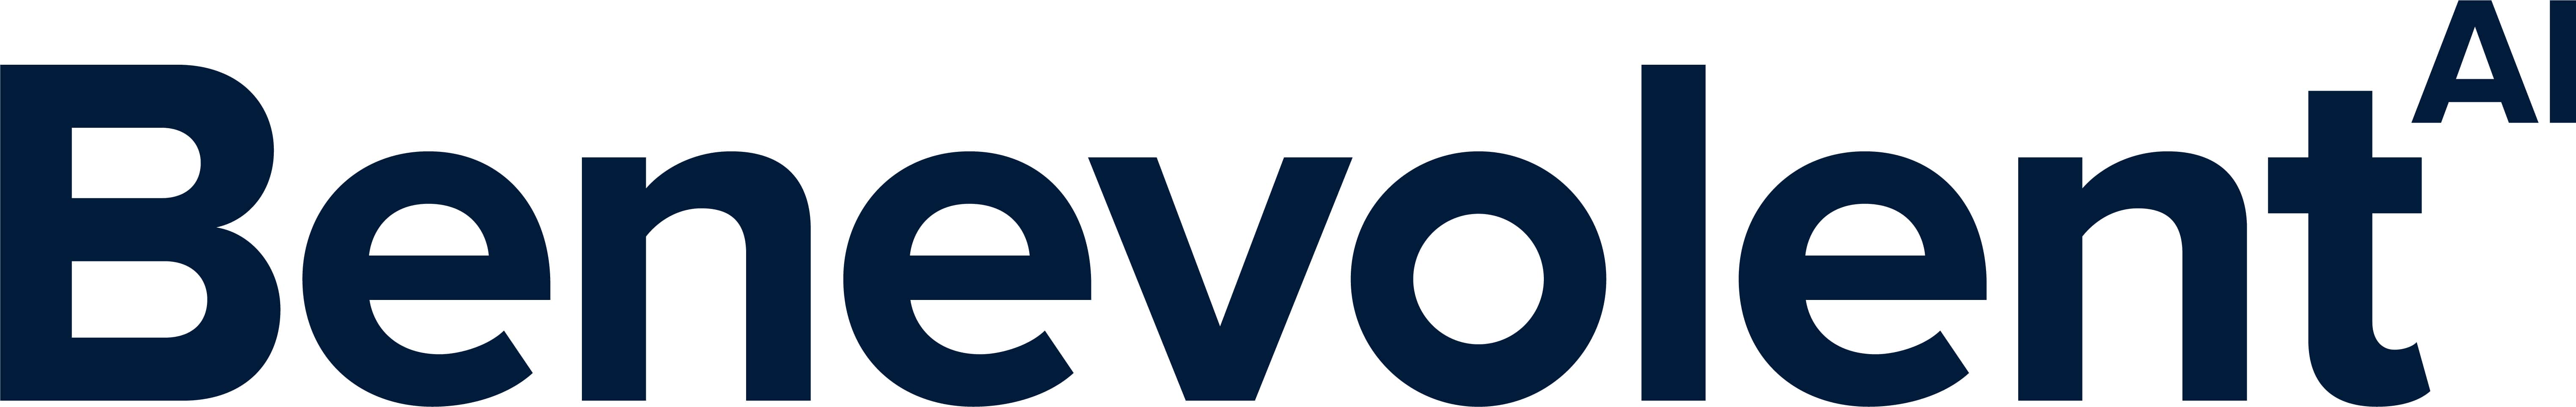 Benevolent AI navy logo